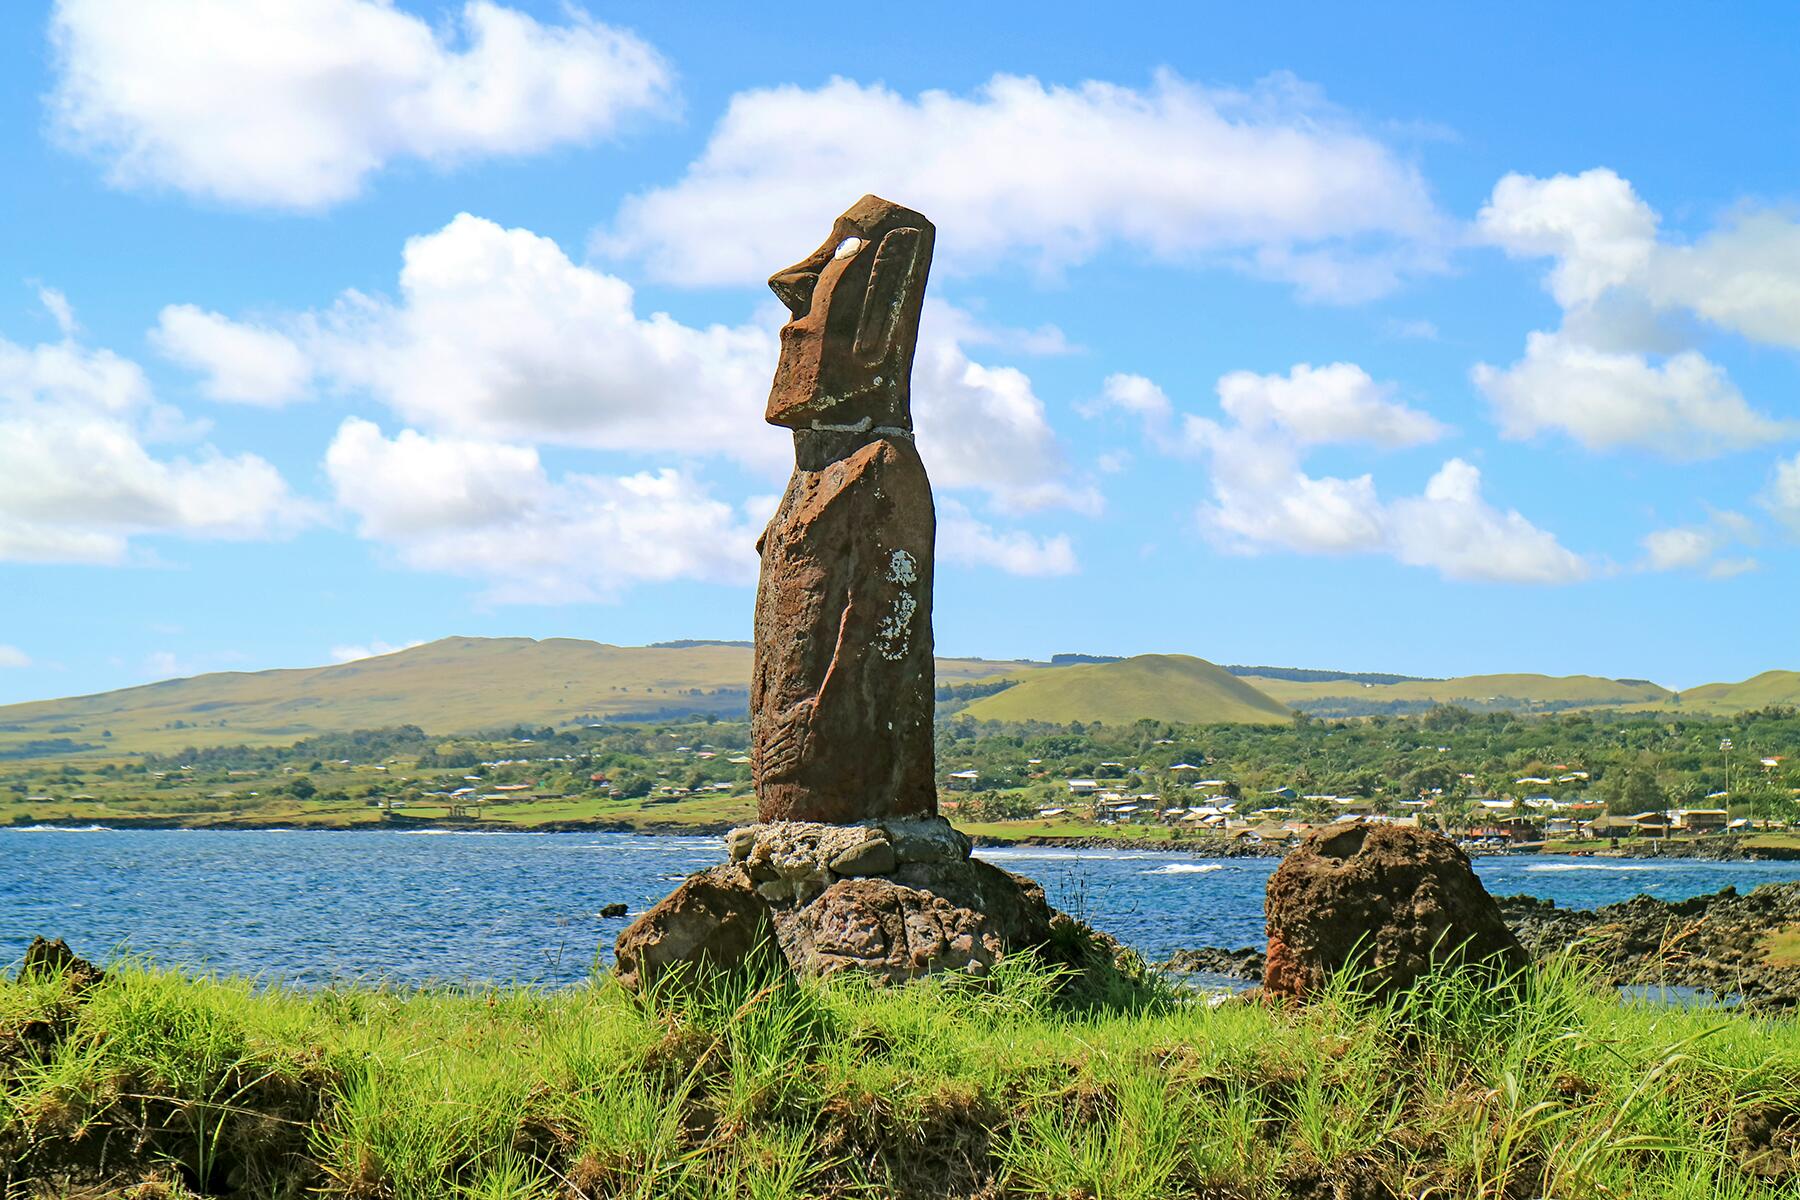 <a href='https://www.fodors.com/go-list/2020/south-america#easter-island'>Fodor’s Go List 2020: Easter Island, Chile</a>